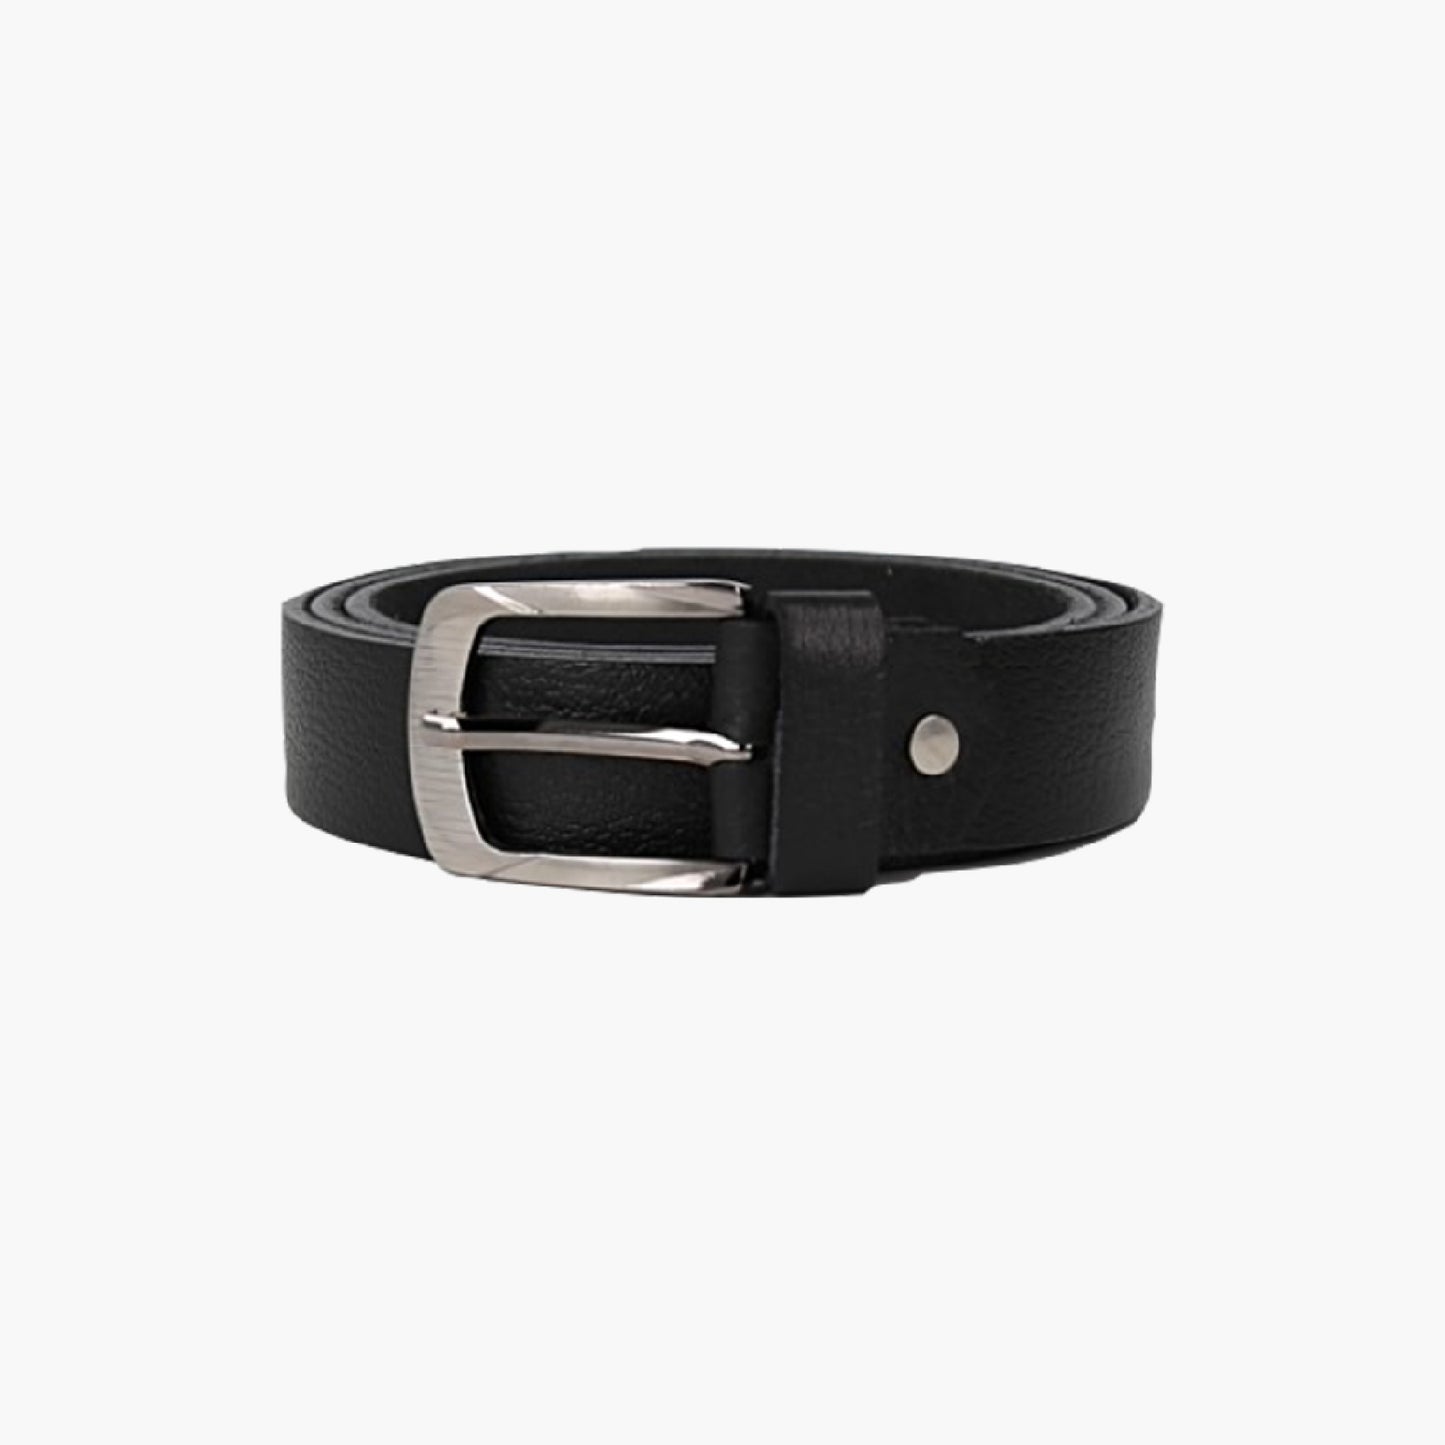 The One® Slim Leather Belt - Black